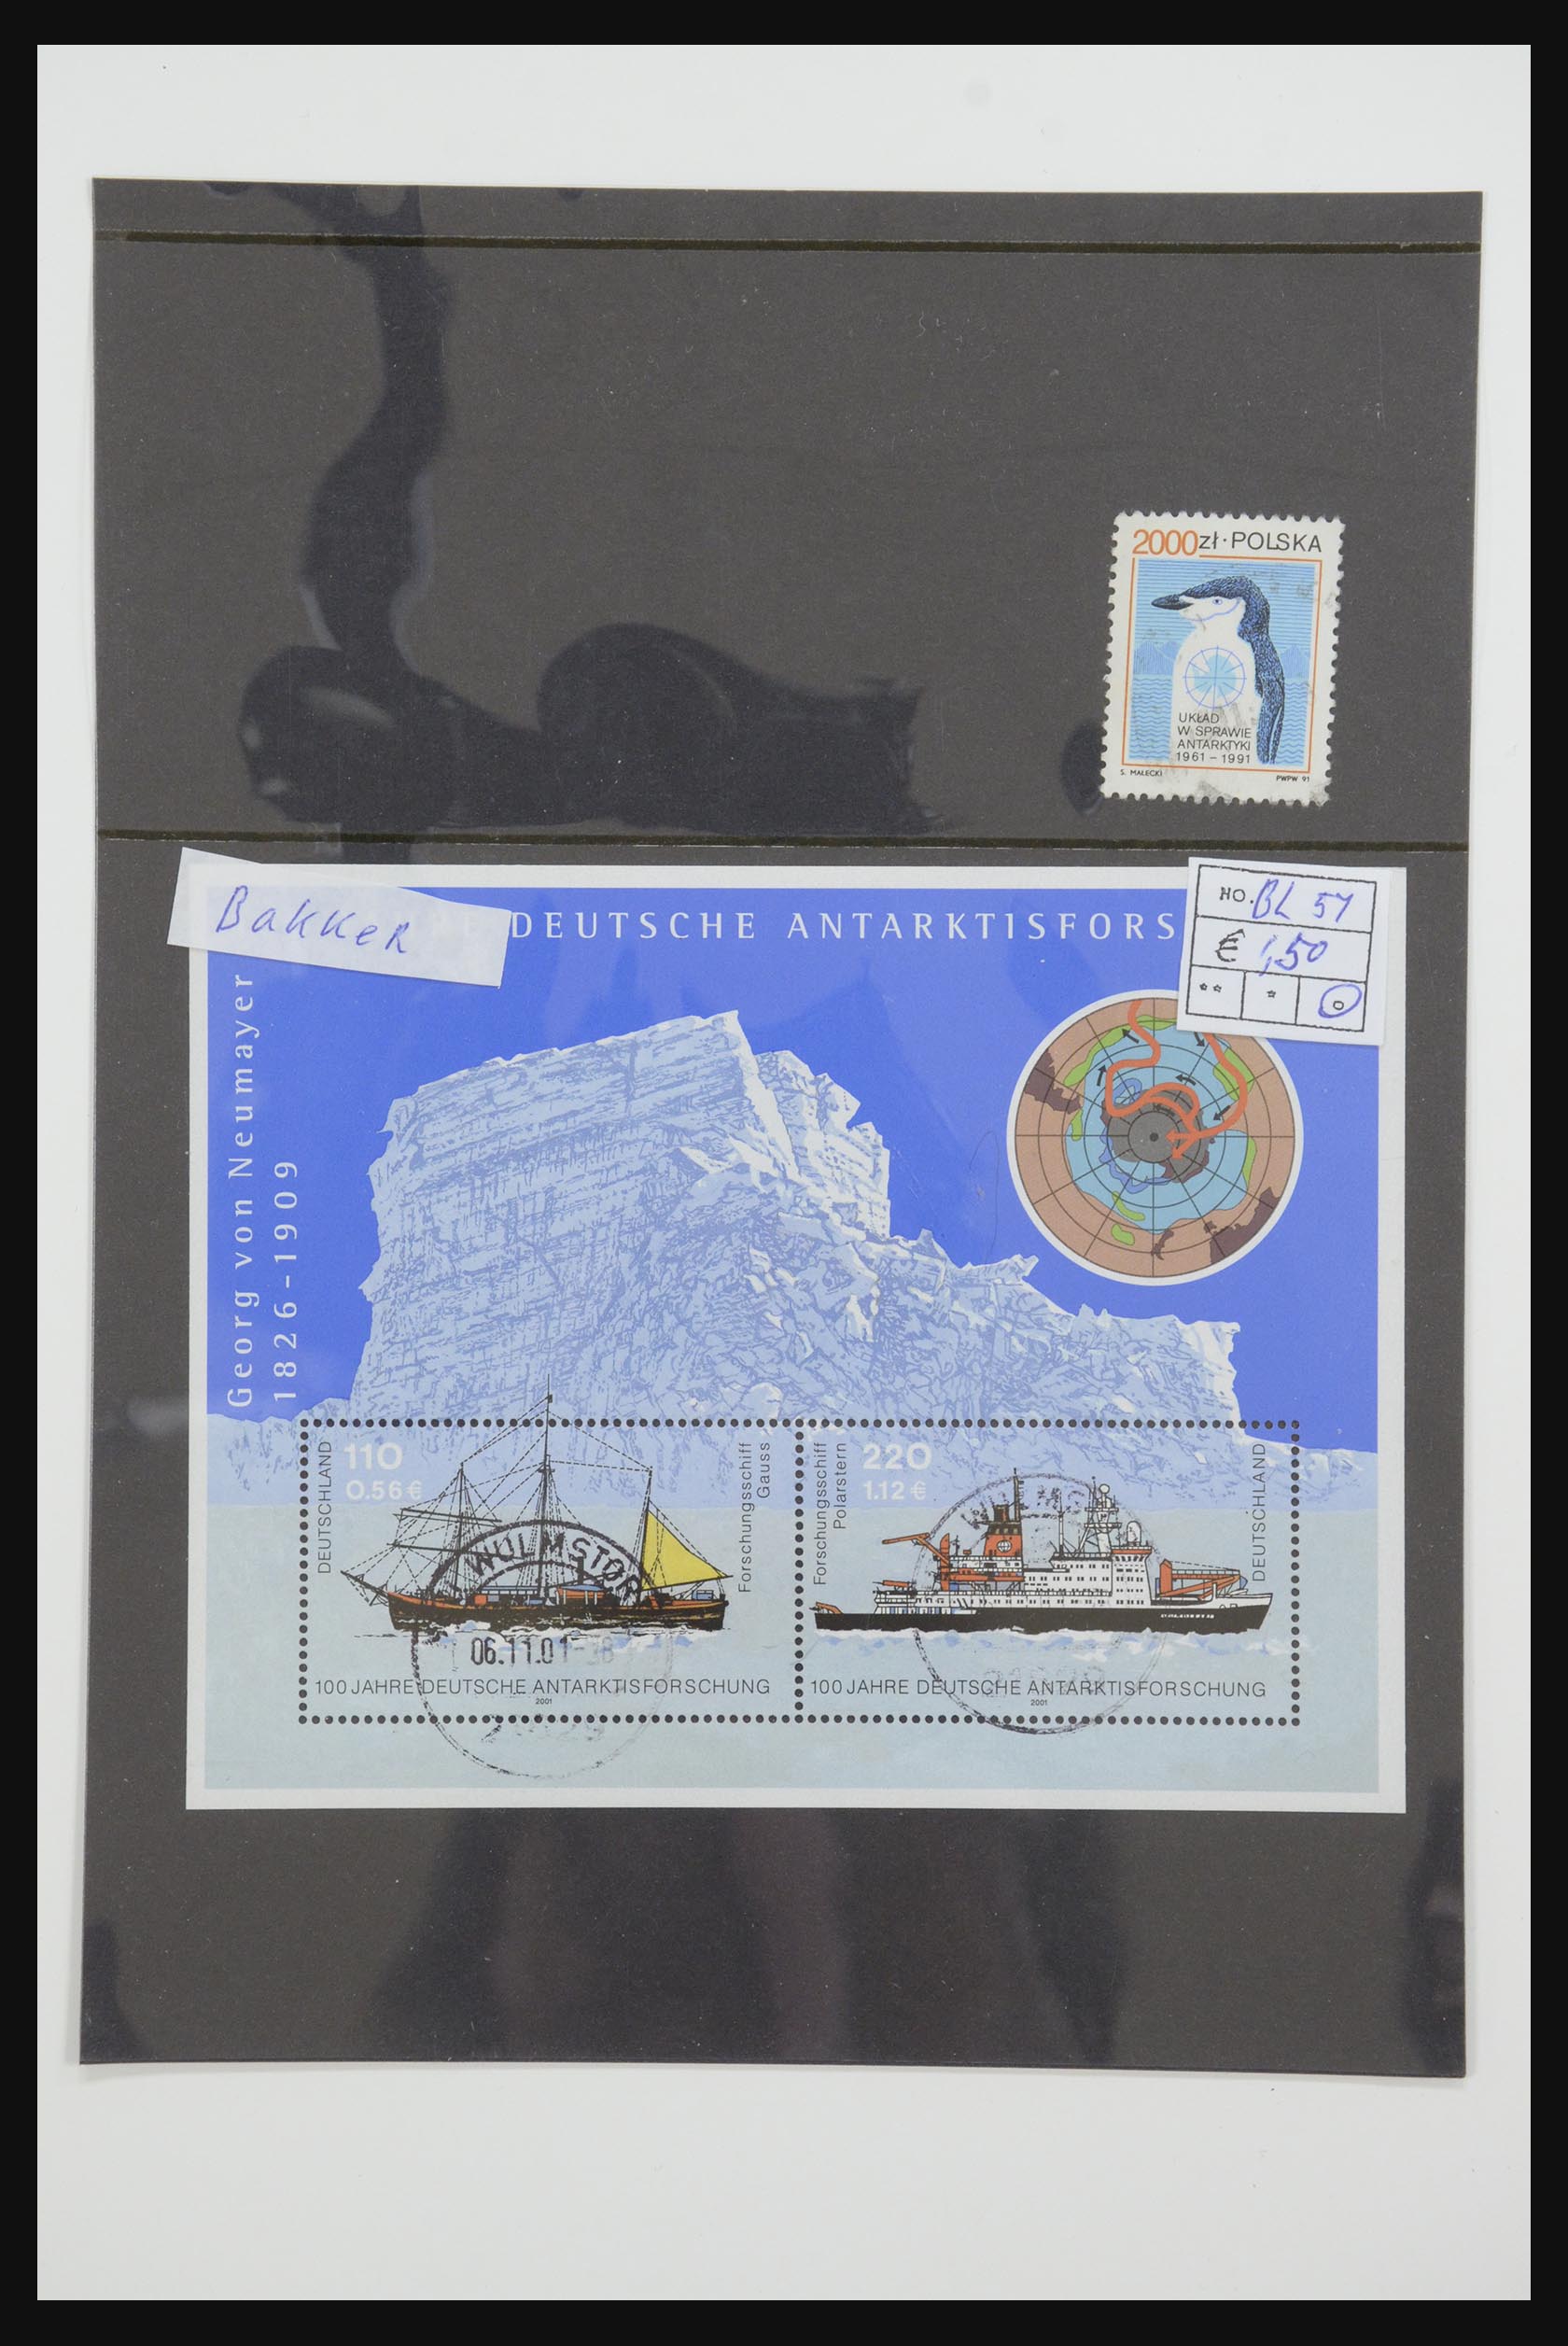 31659 002 - 31659 Motief: Antarctica en Arctica 1880-1998.